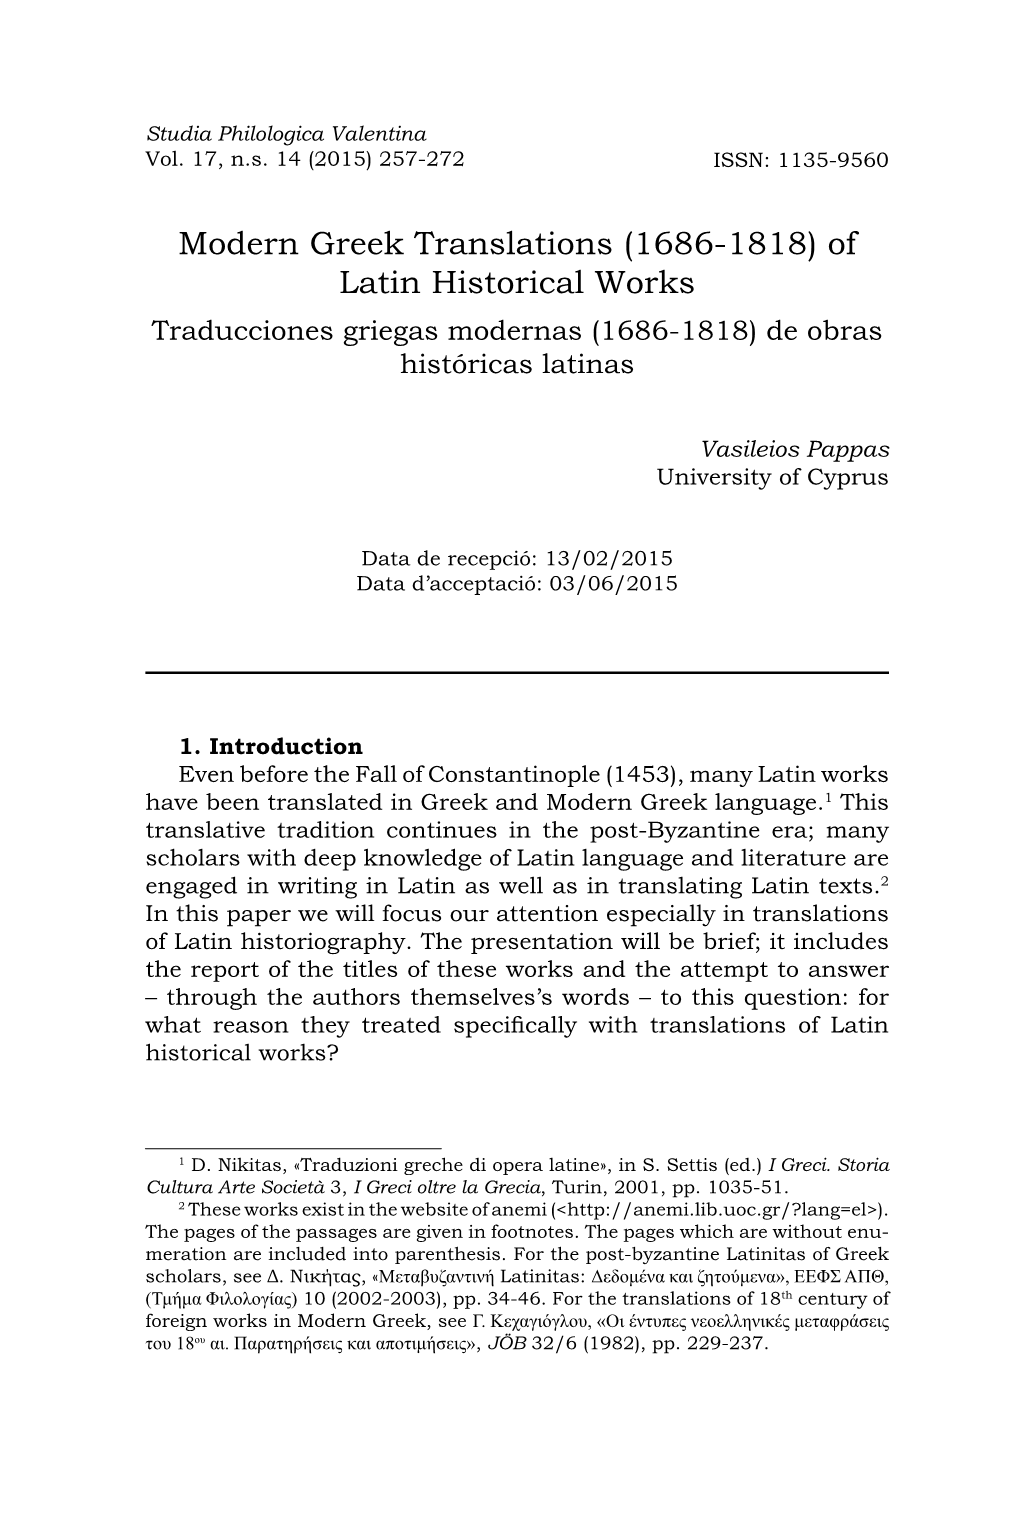 Modern Greek Translations (1686-1818) of Latin Historical Works Traducciones Griegas Modernas (1686-1818) De Obras Históricas Latinas